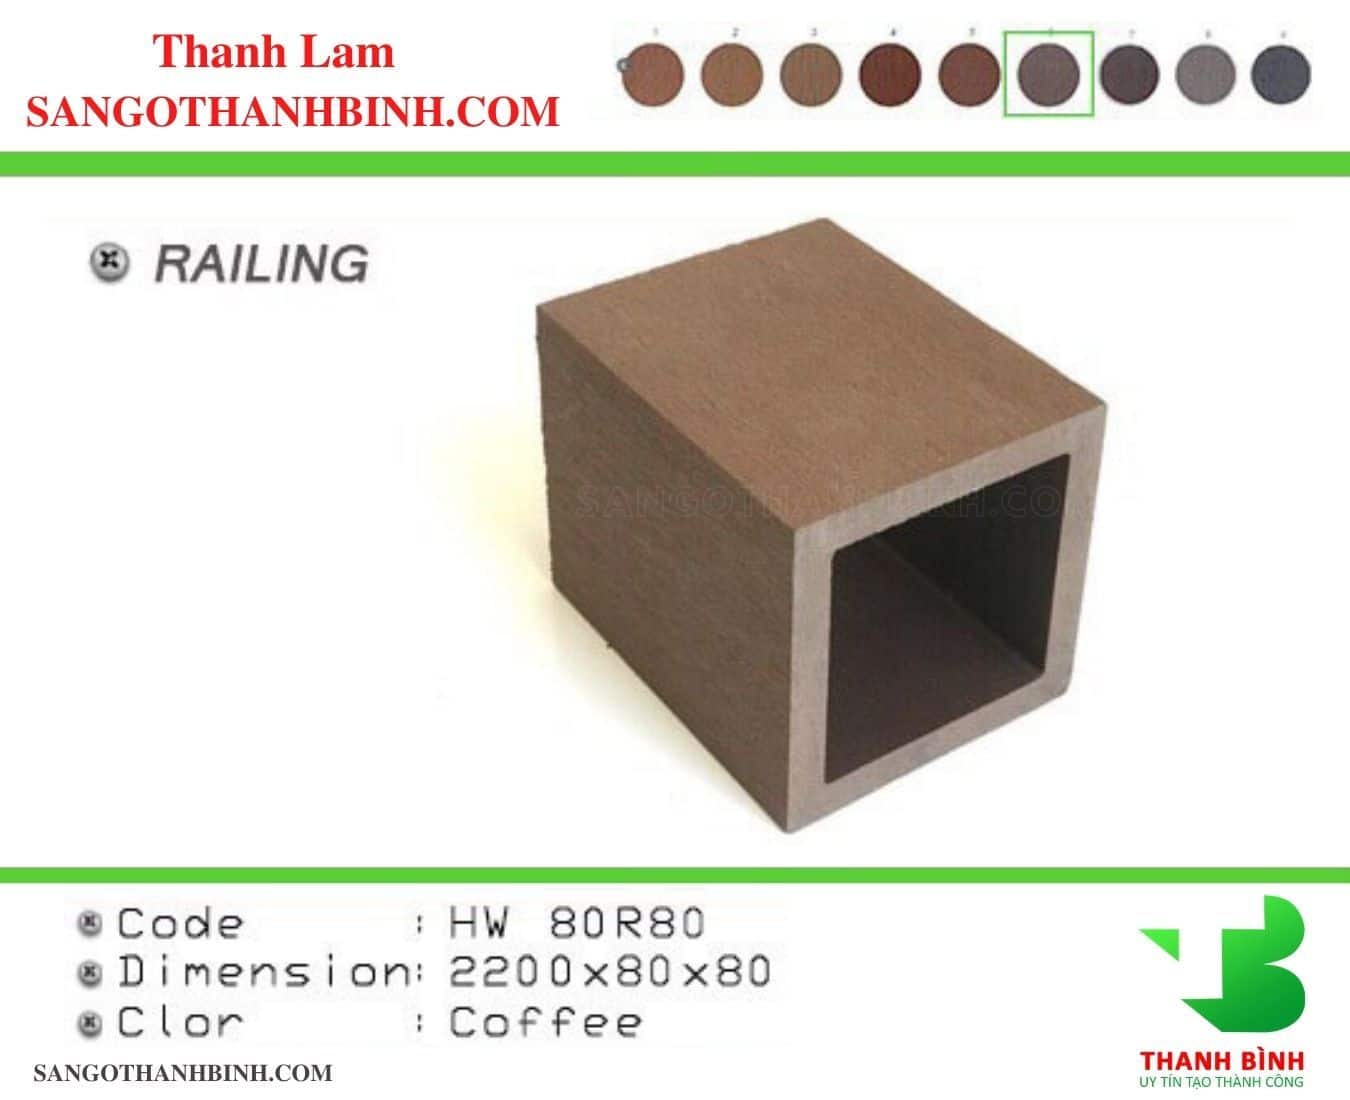 Thanh Lam Go Nhua Trang Tri Ngoai That Ma HW80R80 Coffee